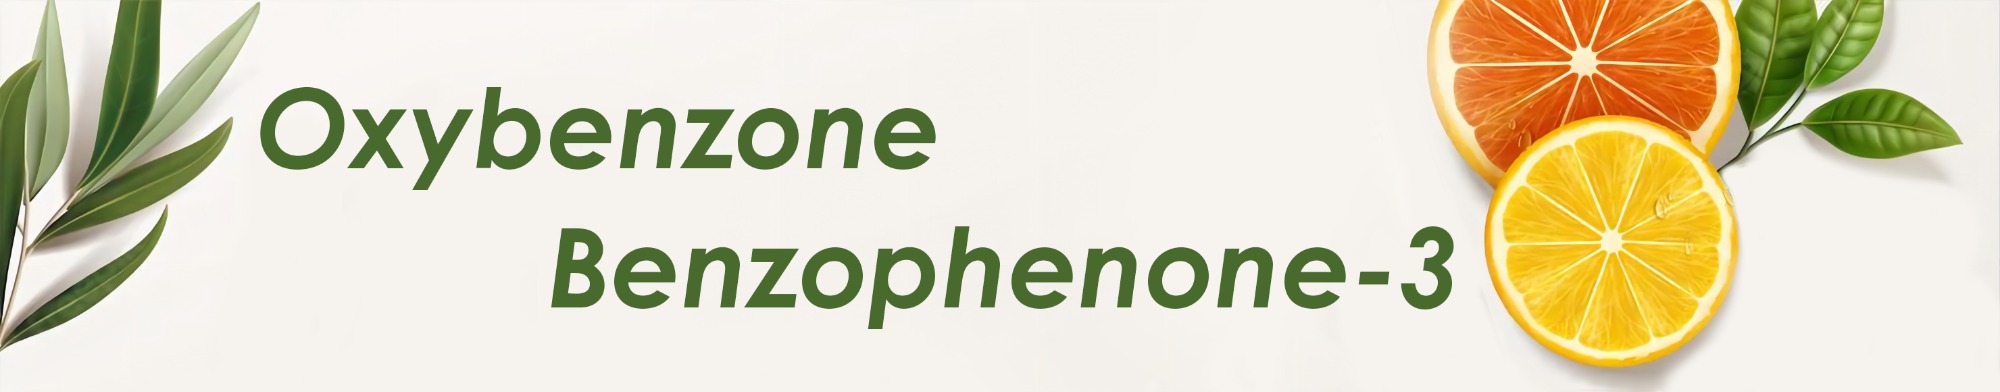 Oxybenzone -  Benzophenone-3 - Greenway Wholesale